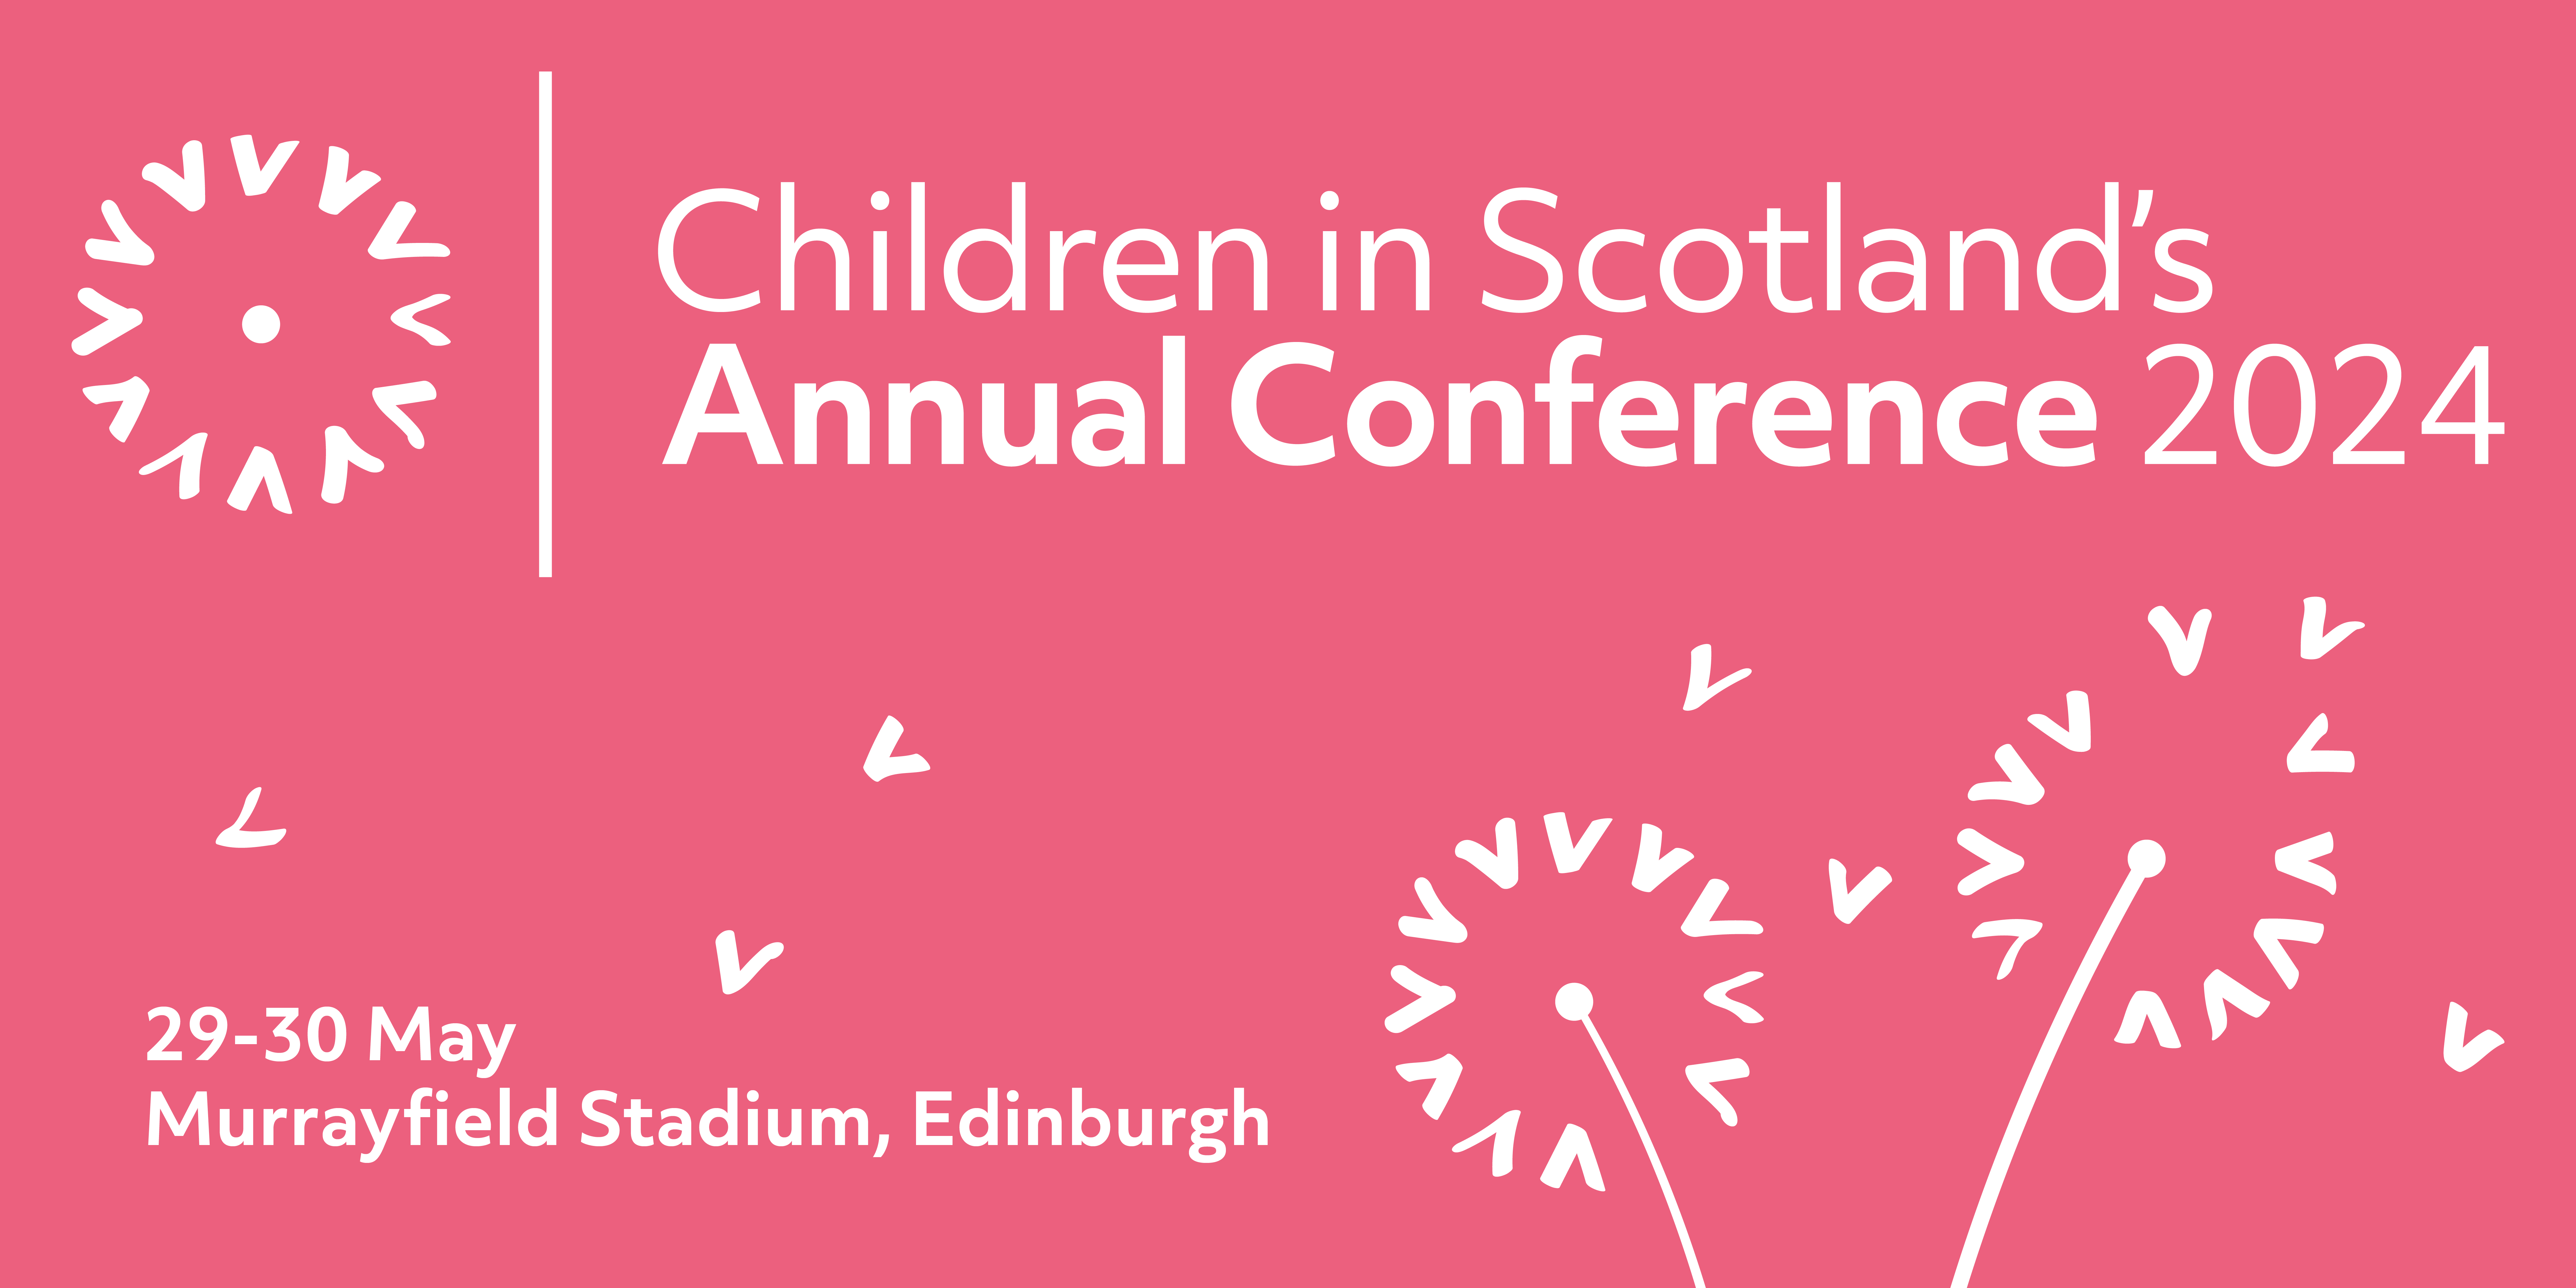 White on pink banner, logo is a dandelion made from the Children in Scotland arrow. Text reads Children in Scotland's Annual Conference 2024. 29-30 May, Murrayfield Stadium, Edinburgh